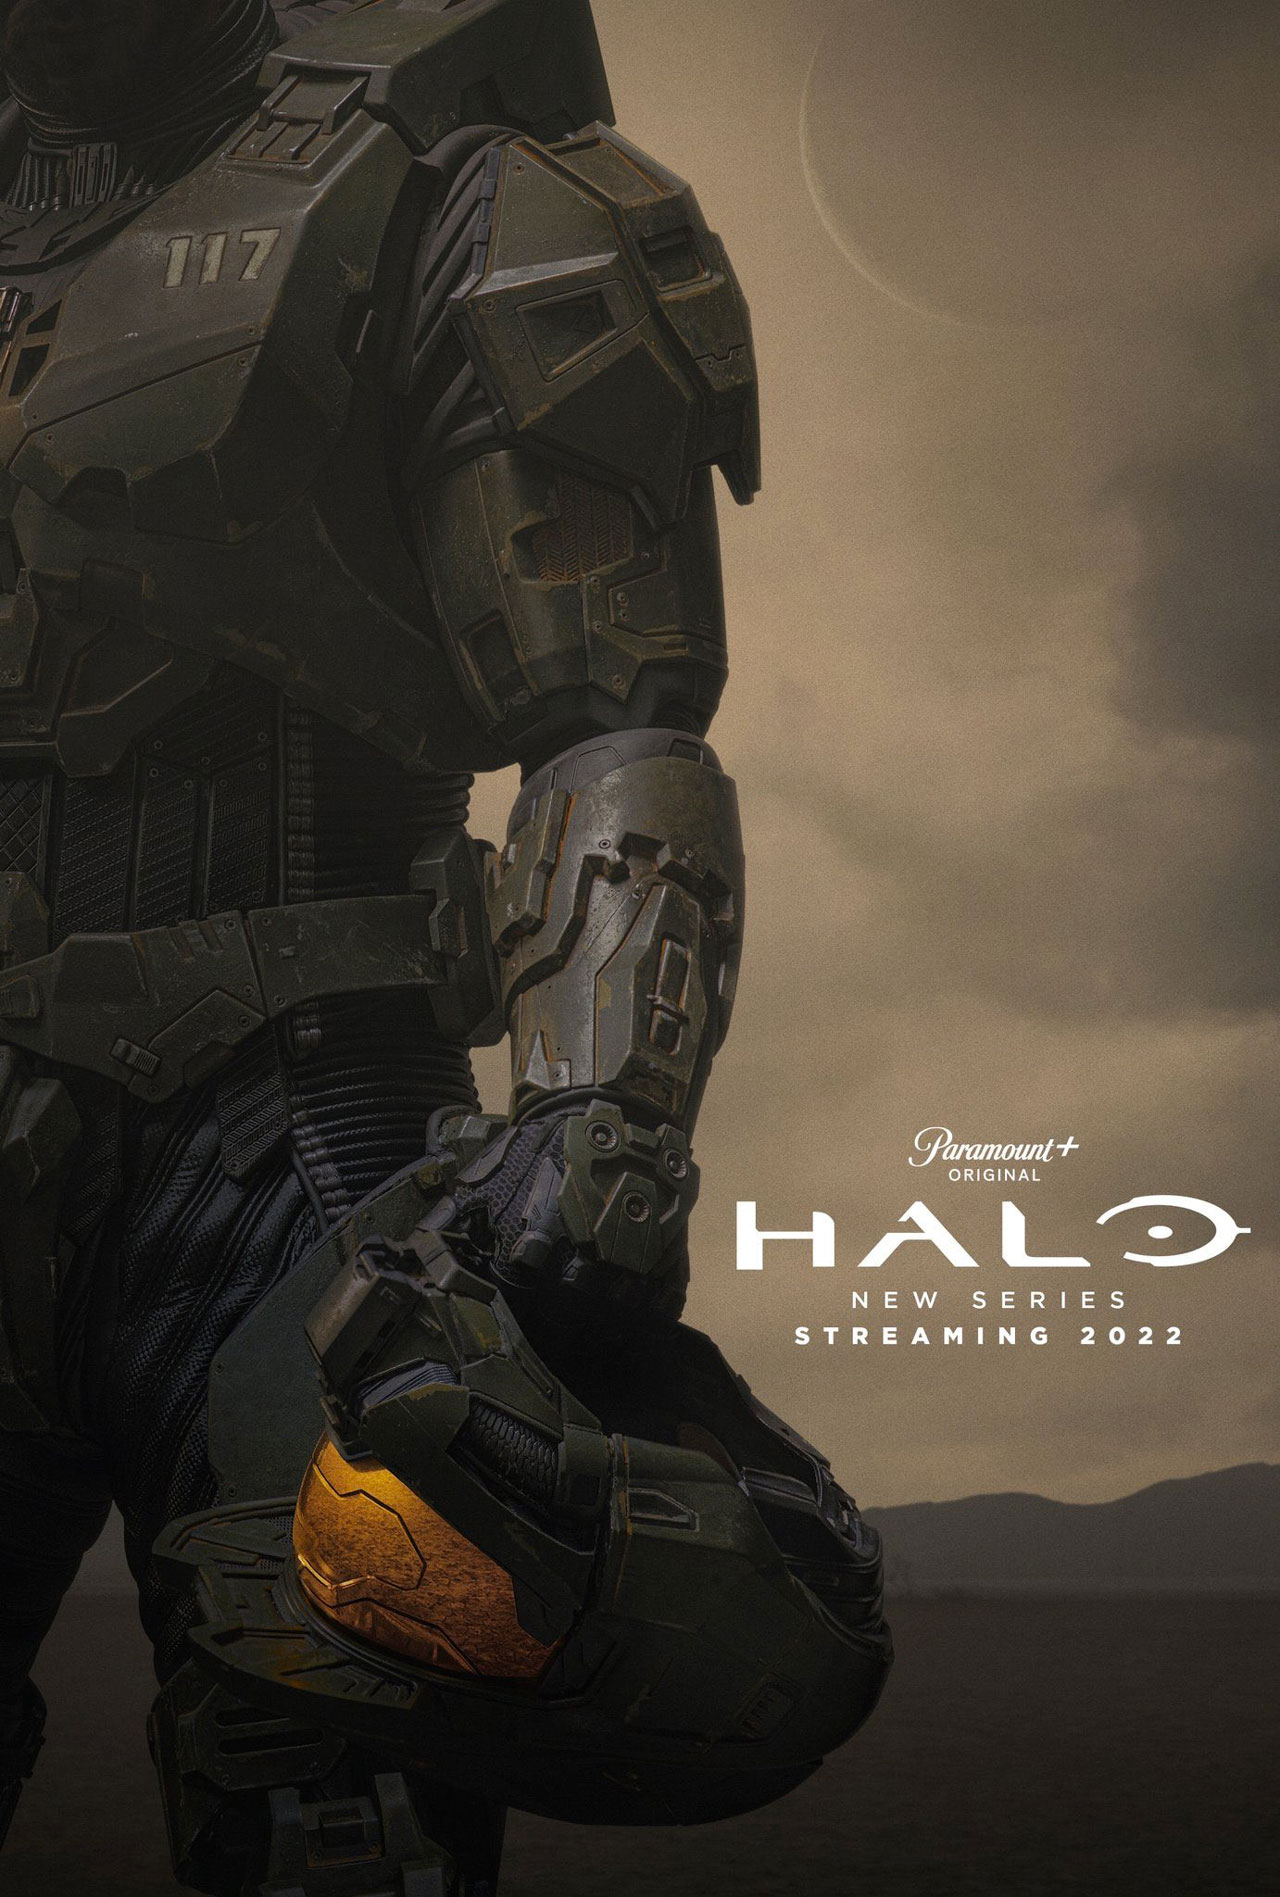 Halo 4 Launch Trailer - VFX Breakdowns on Vimeo